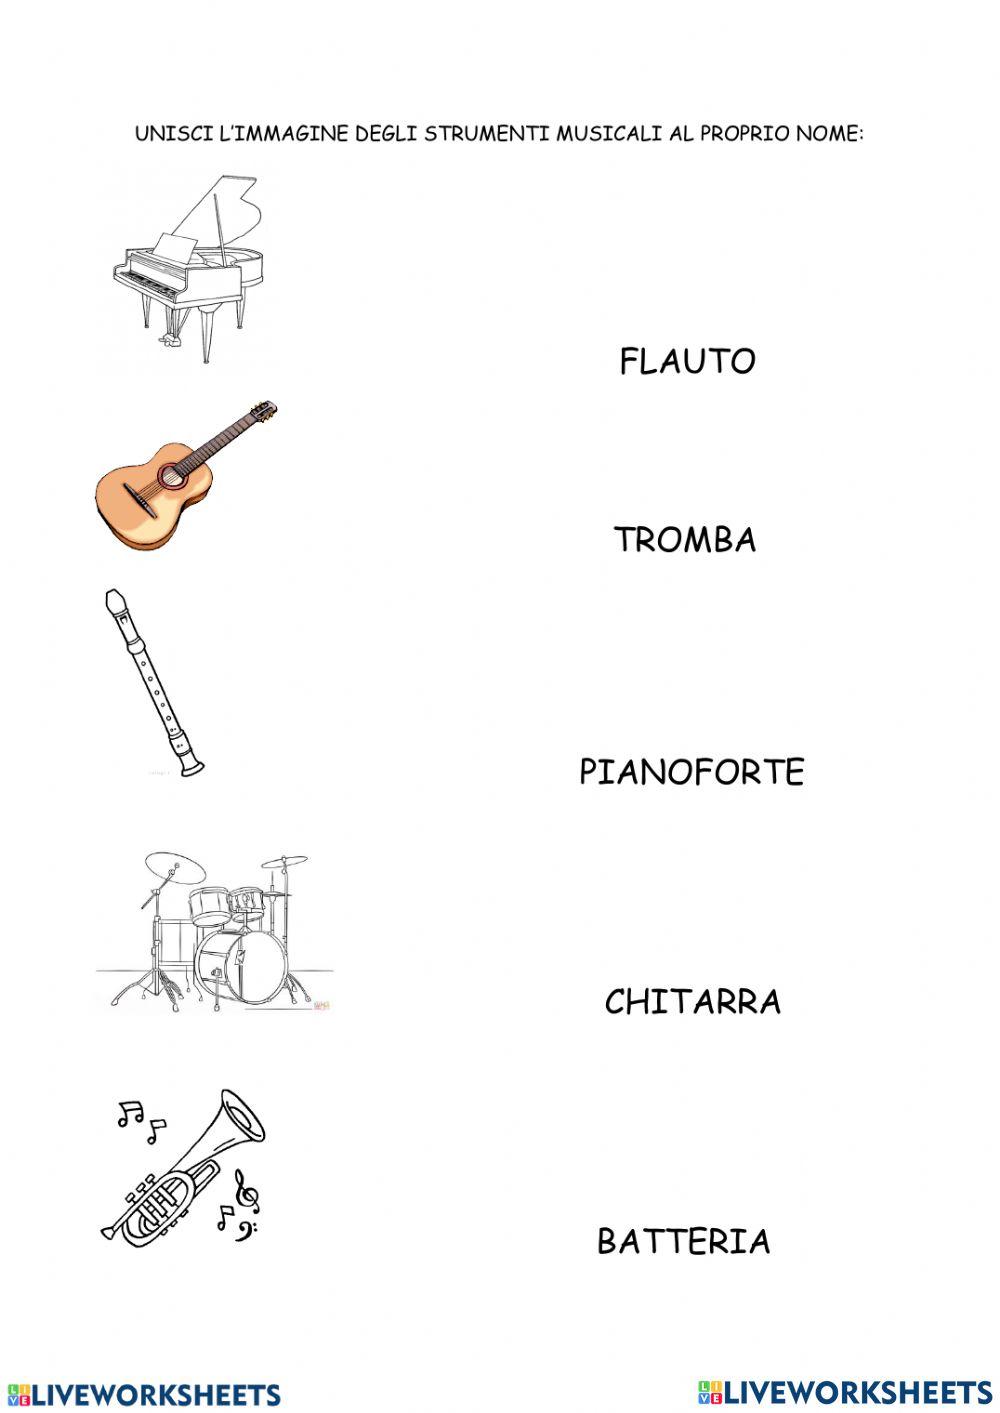 Gli strumenti musicali